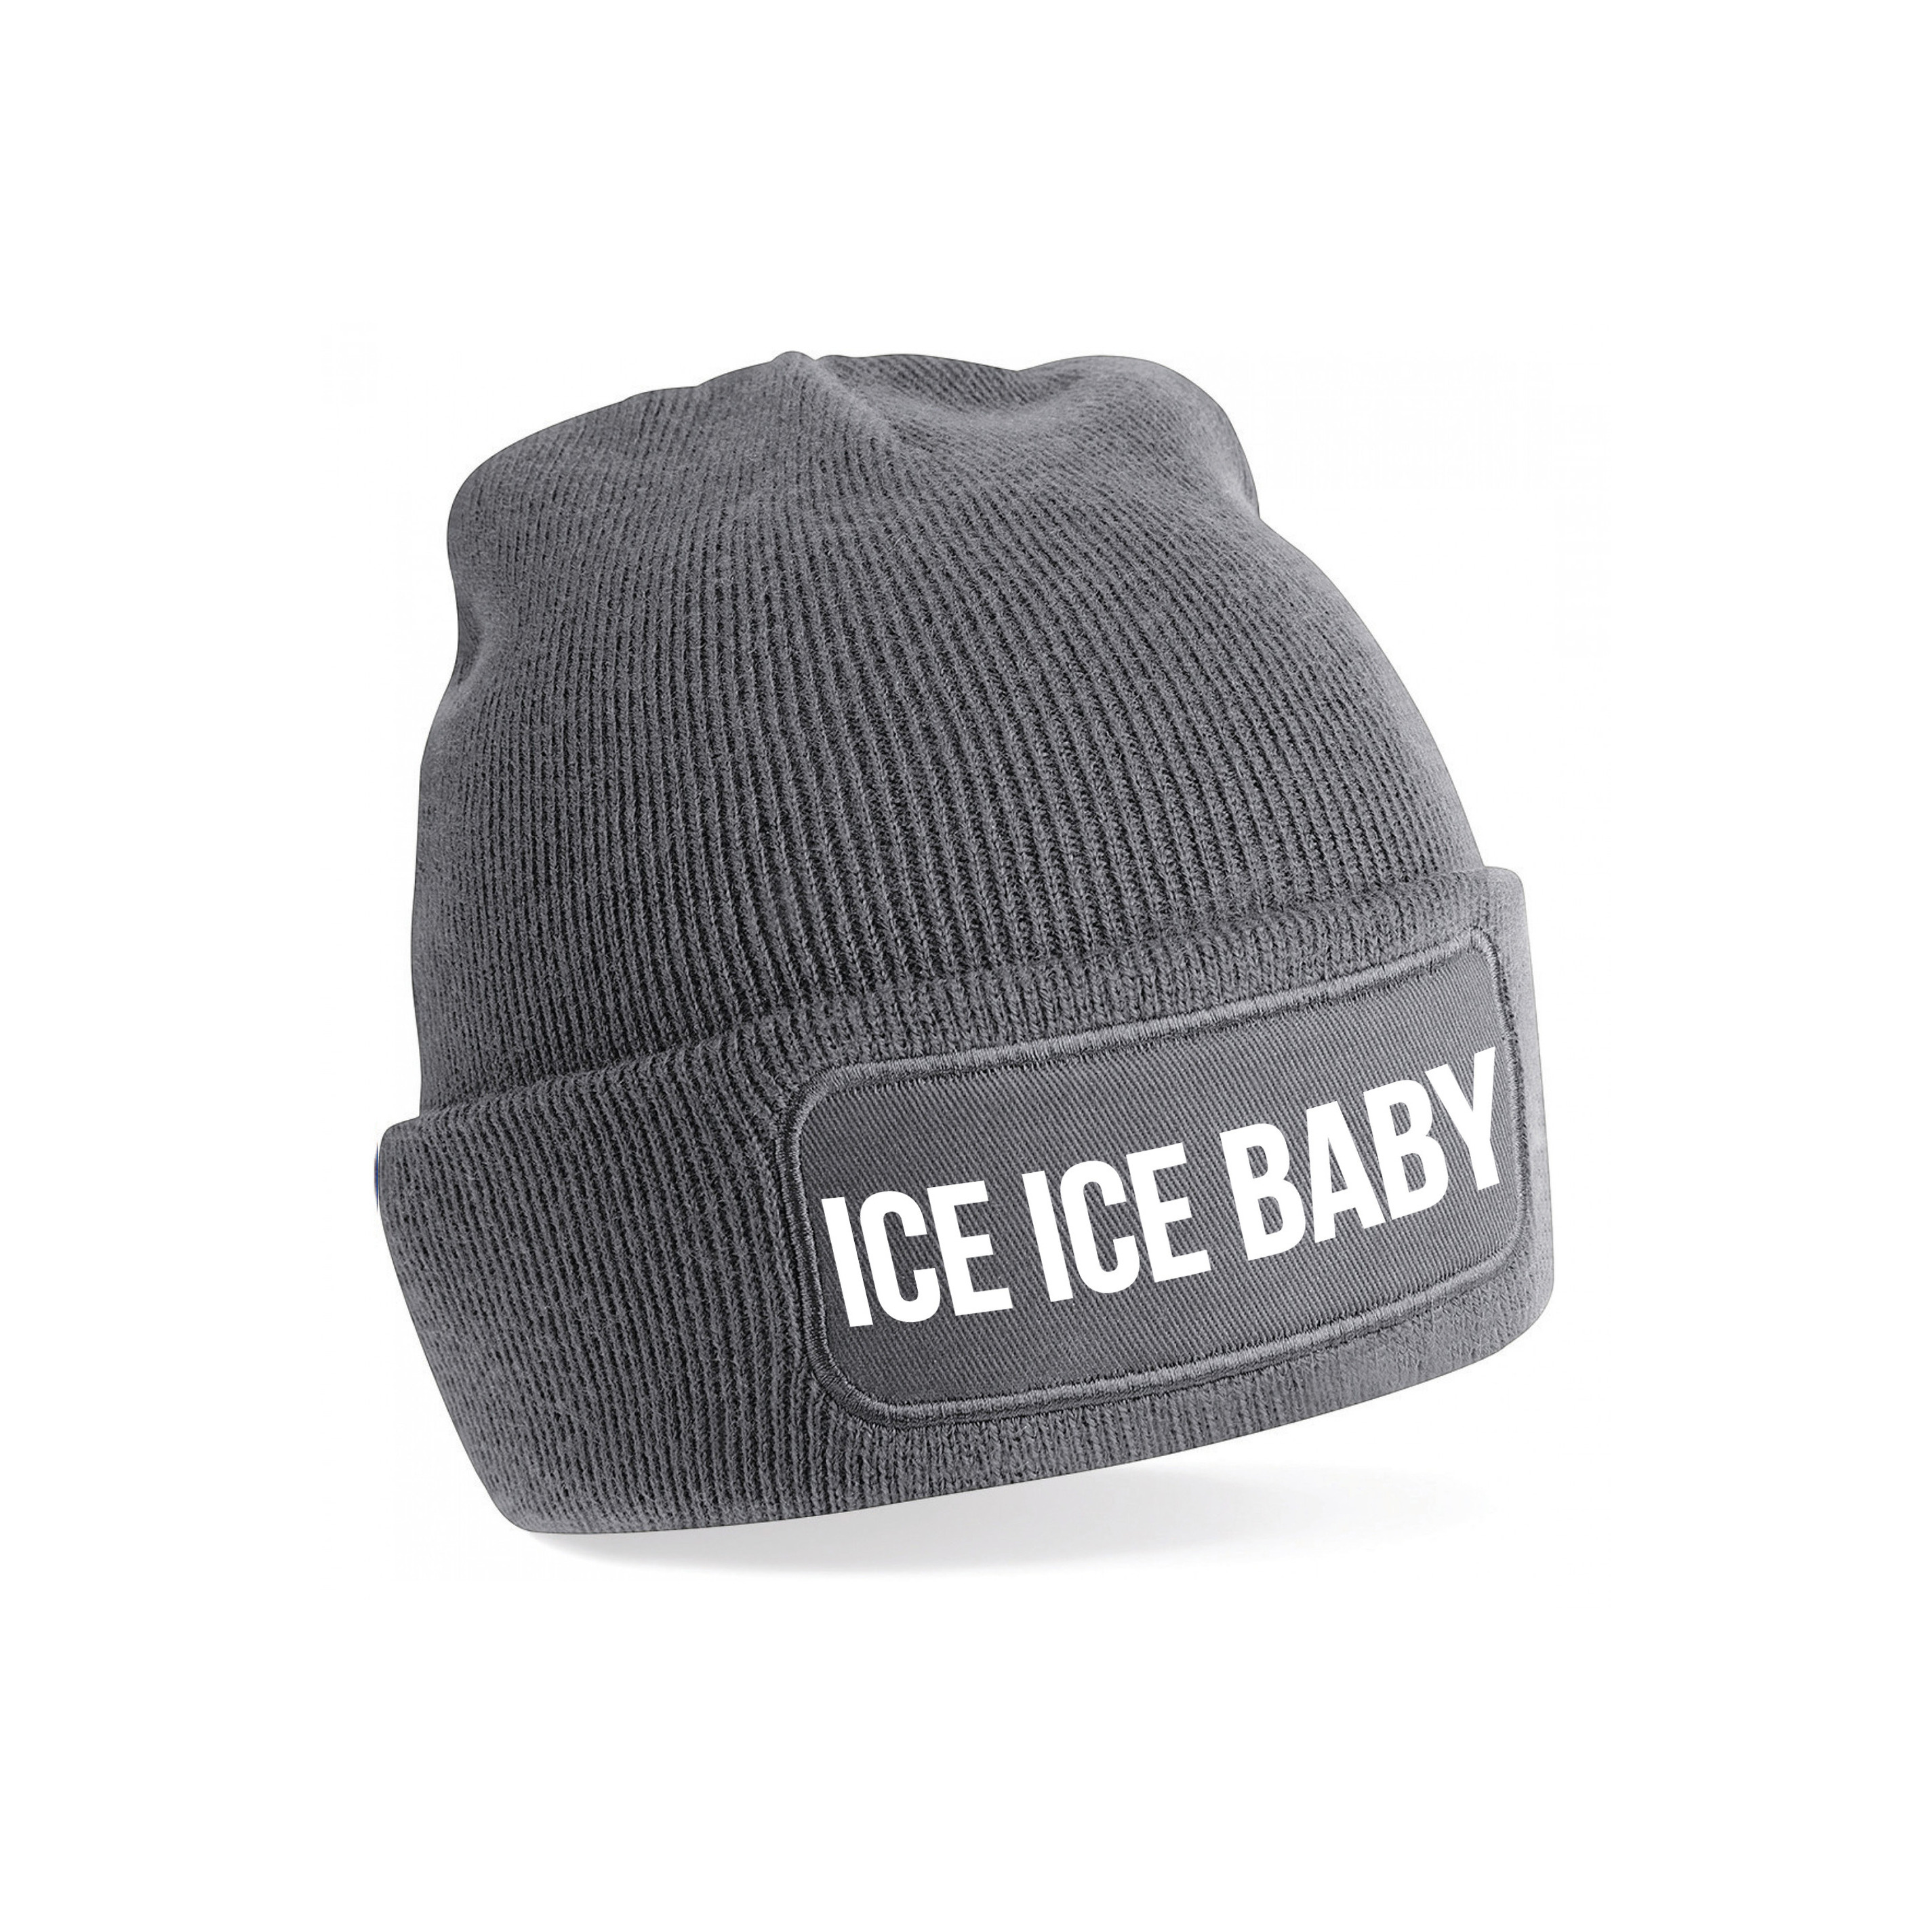 Ice ice baby muts unisex one size grijs